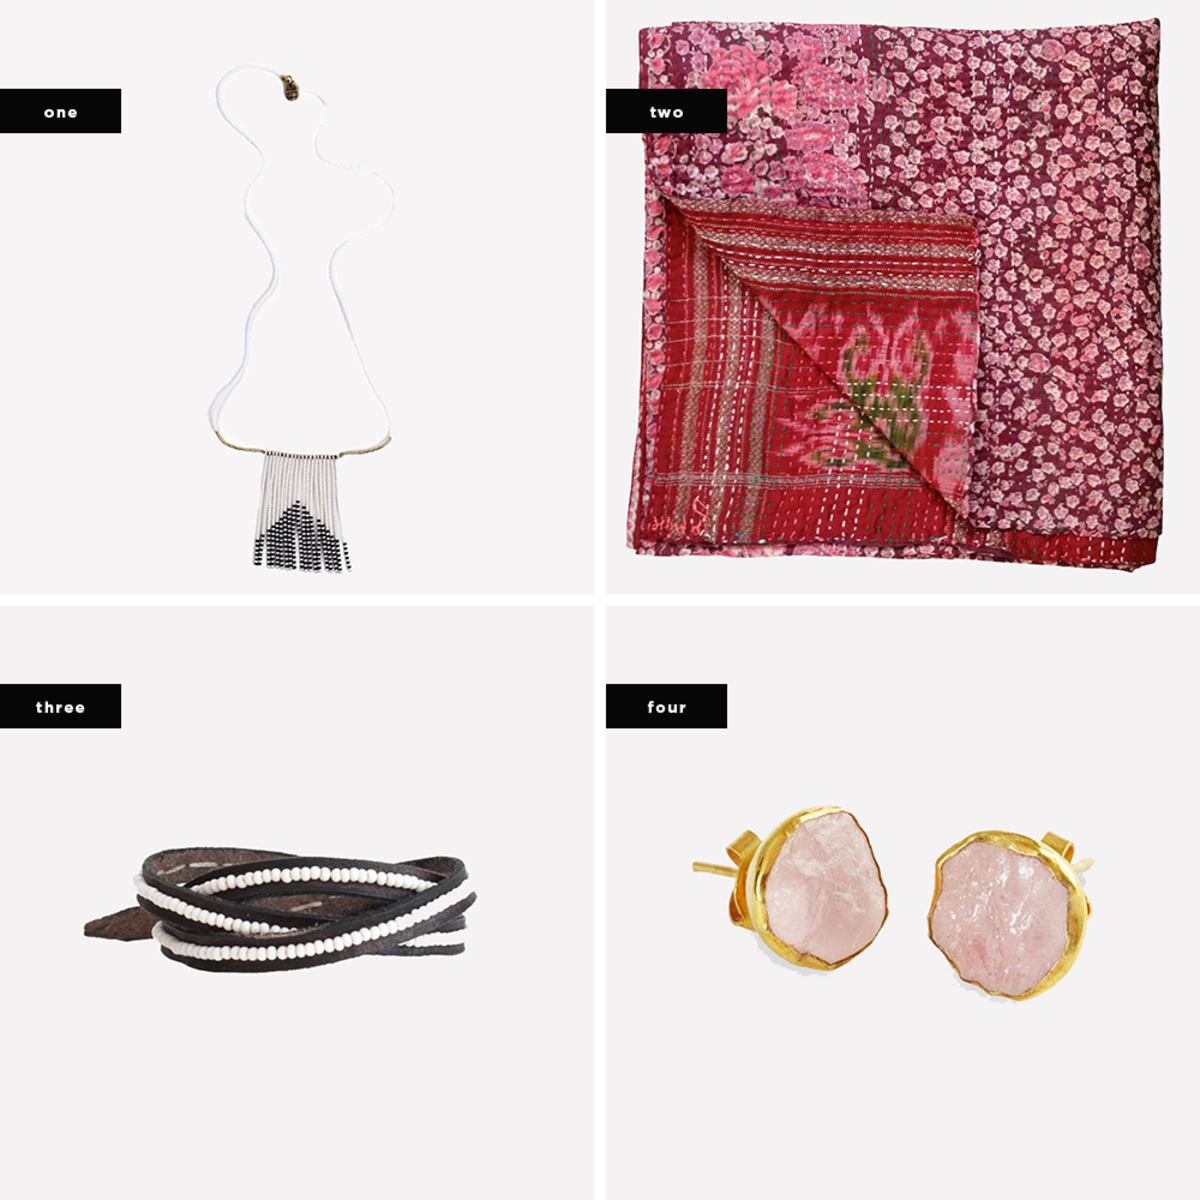 1. Porcupine Naibor Necklace, $60 / 2. Cherry Red Kantha Scarf, $75 / 3. Leather Buckle Wrap Bracelet, $48 / 4. Gold Plate Pink Quartz Studs, $109